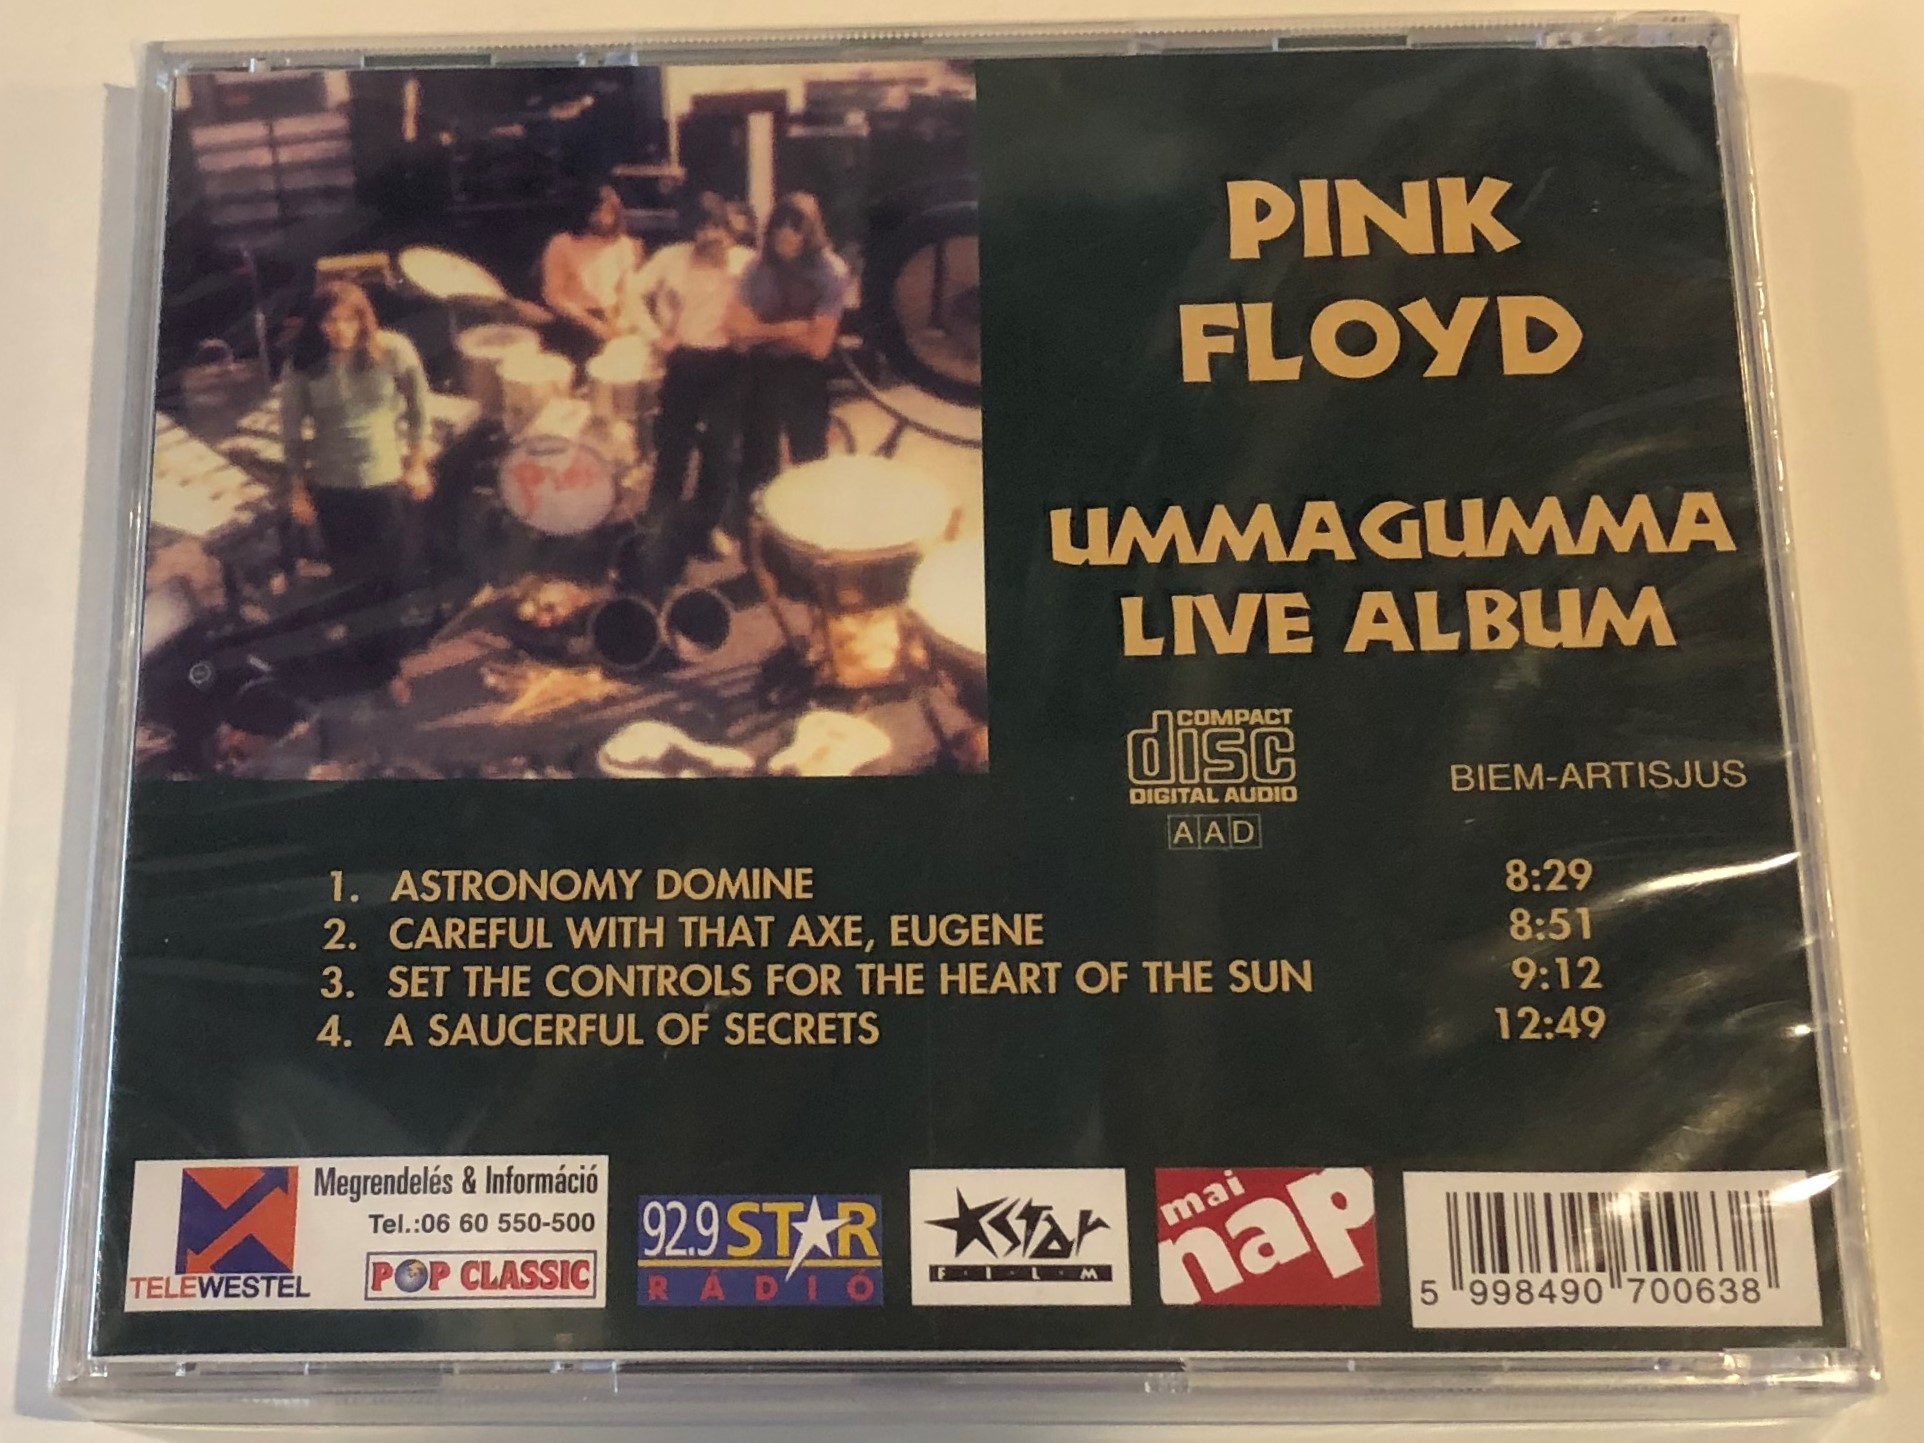 pink-floyd-live-album-ummagumma-pop-classic-audio-cd-5998490700638-2-.jpg